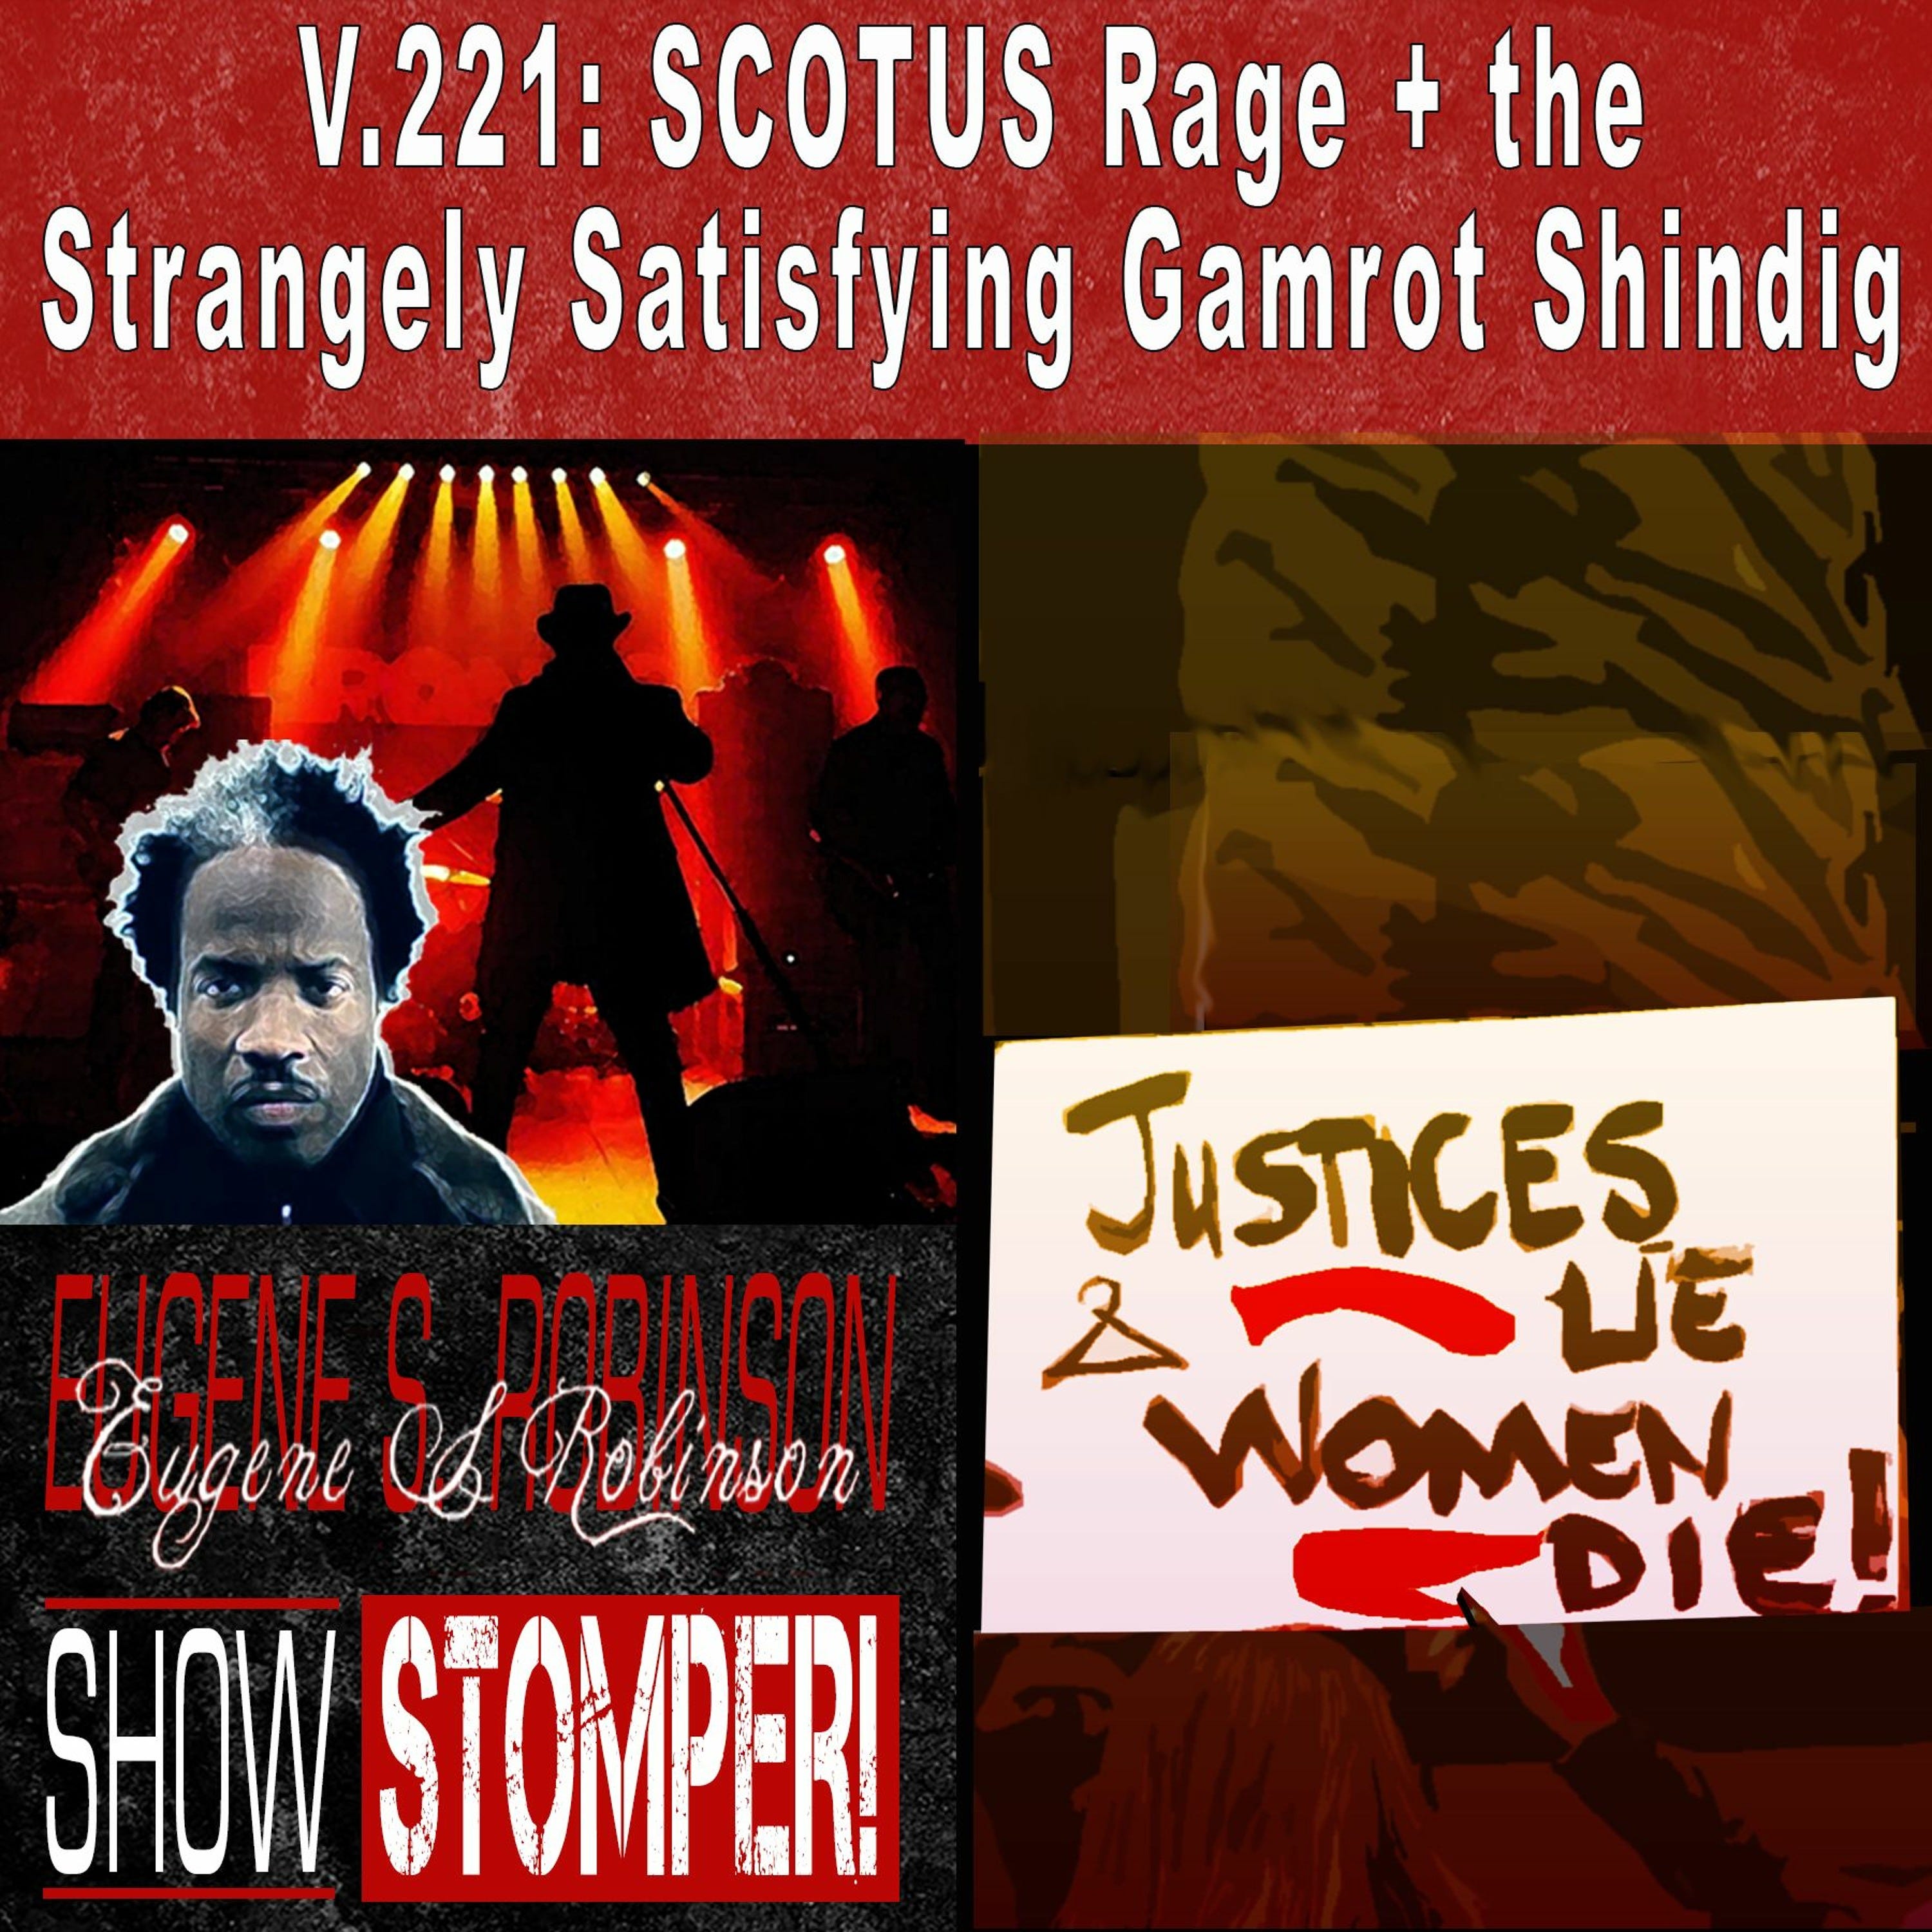 V.221: SCOTUS Rage + the Strangely Satisfying Gamrot Shindig On The Eugene S. Robinson Show Stomper!